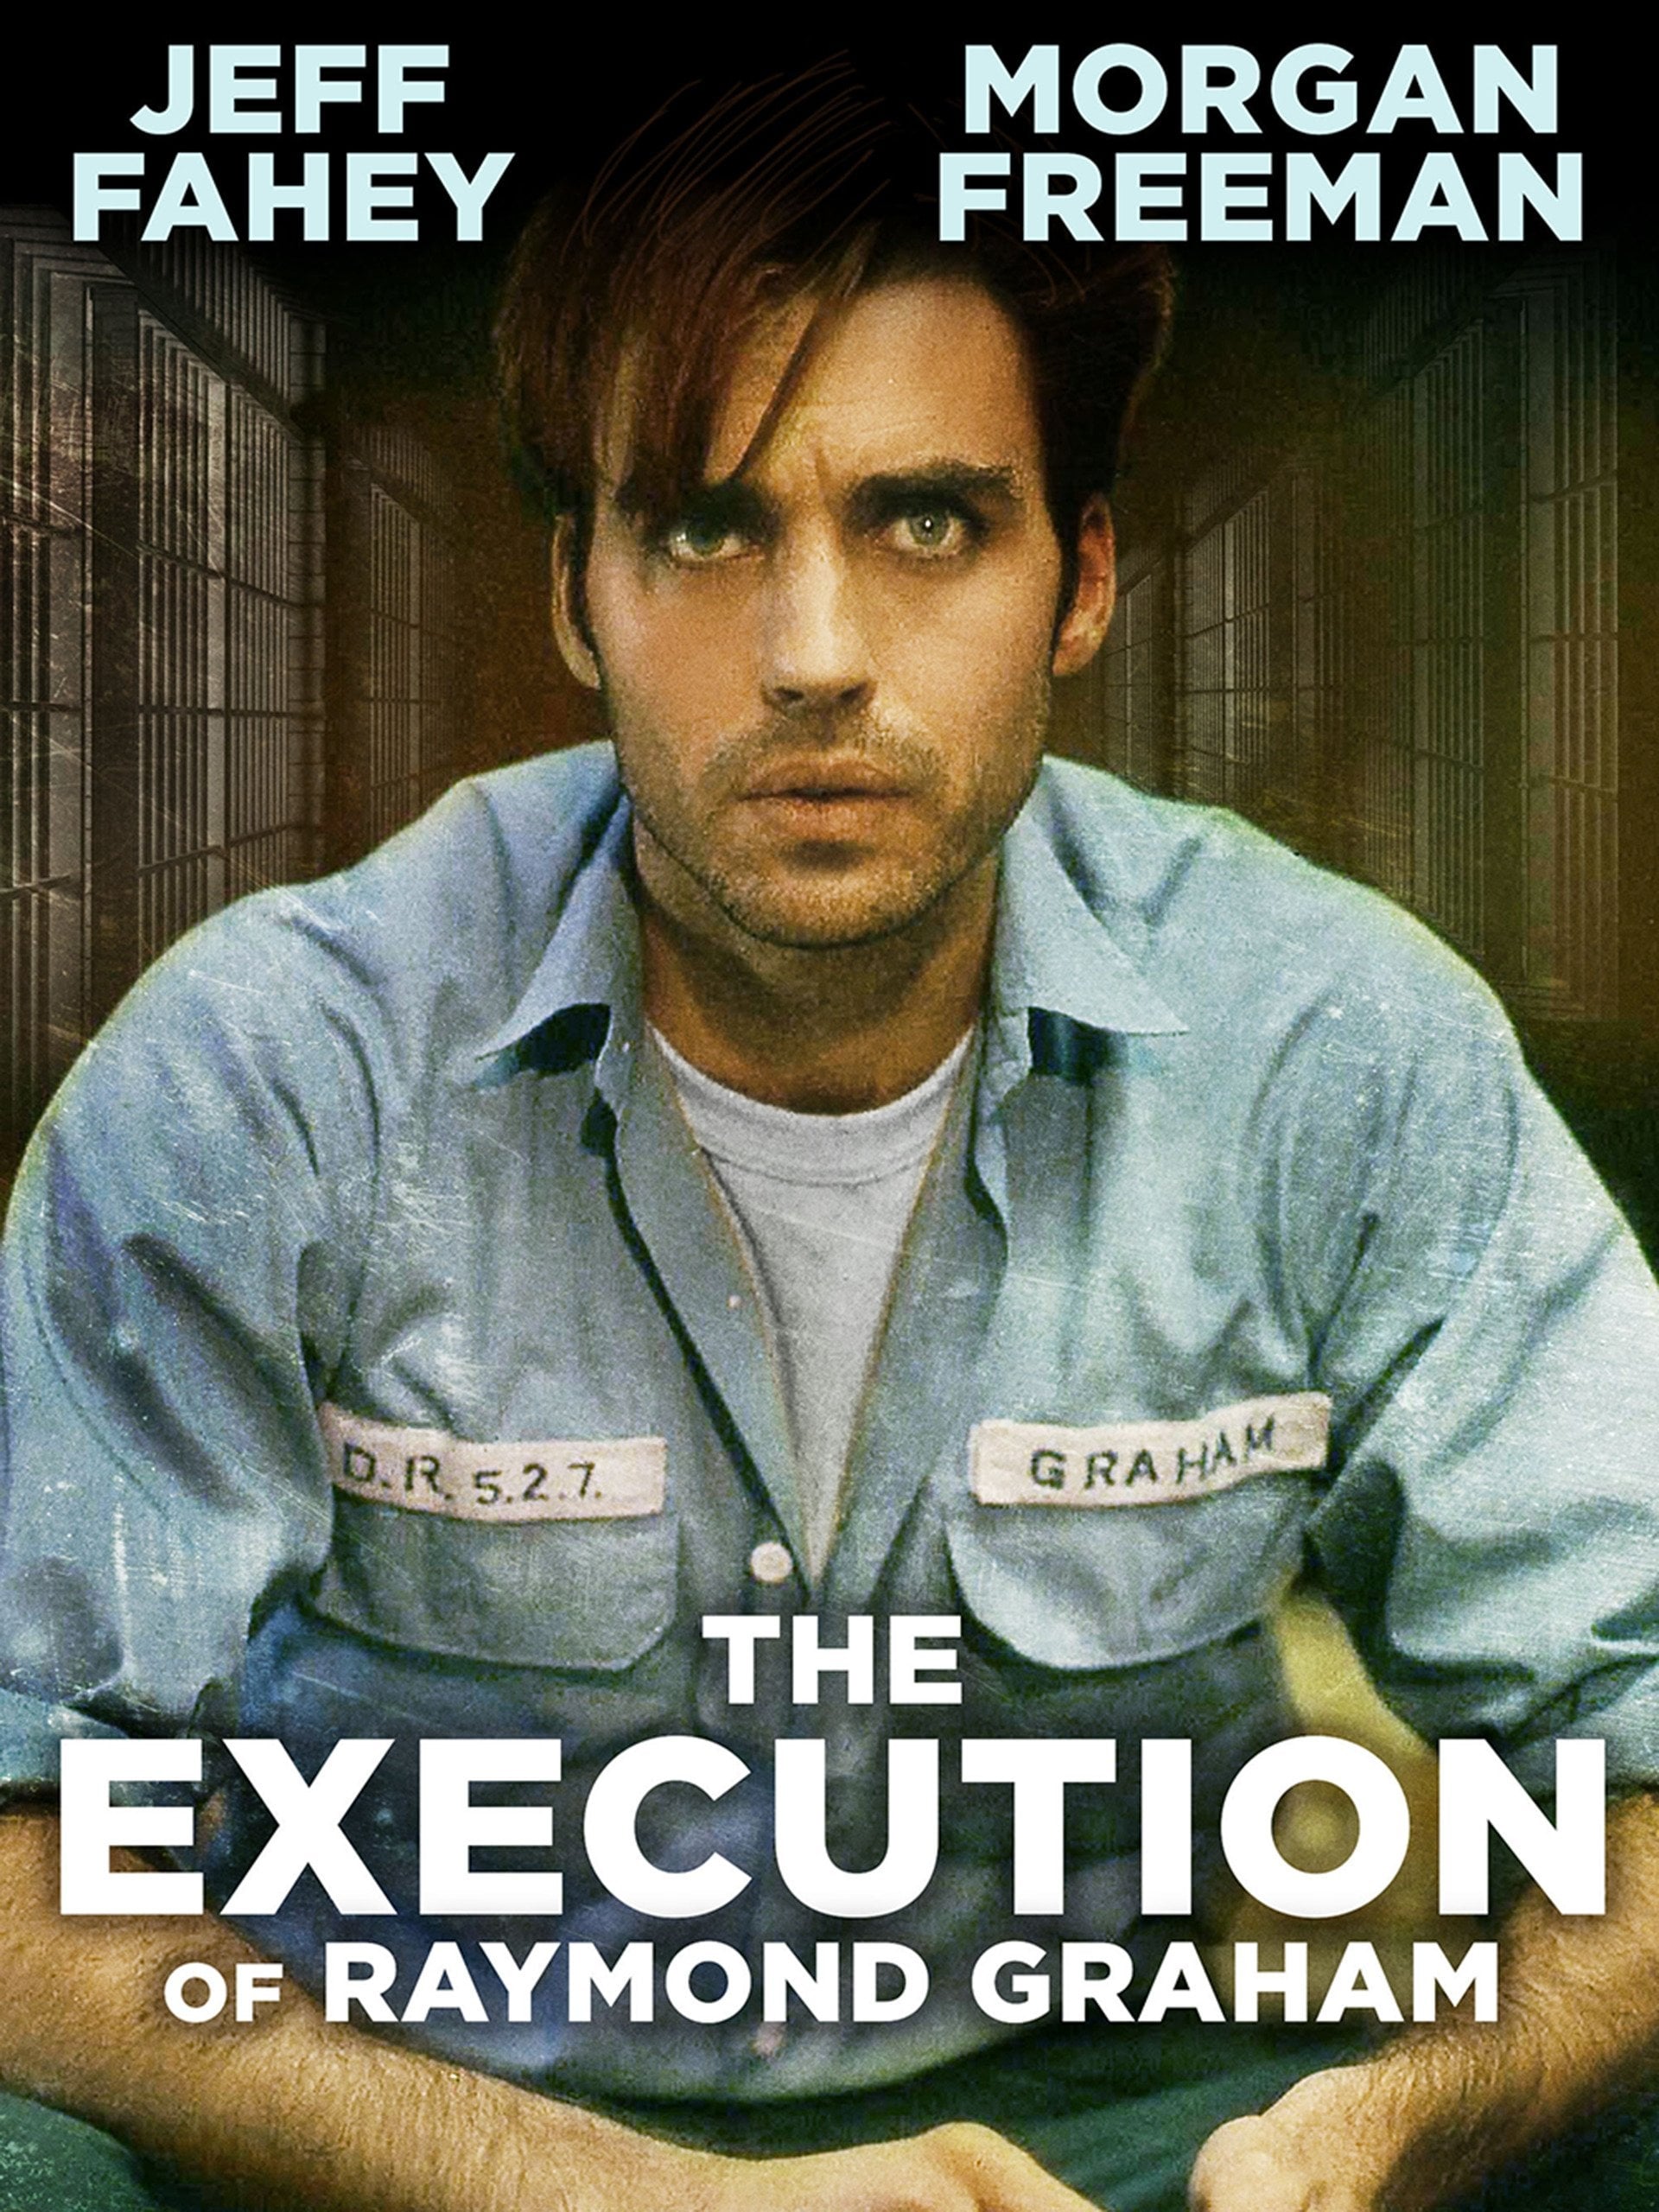 Plakat von "The Execution of Raymond Graham"